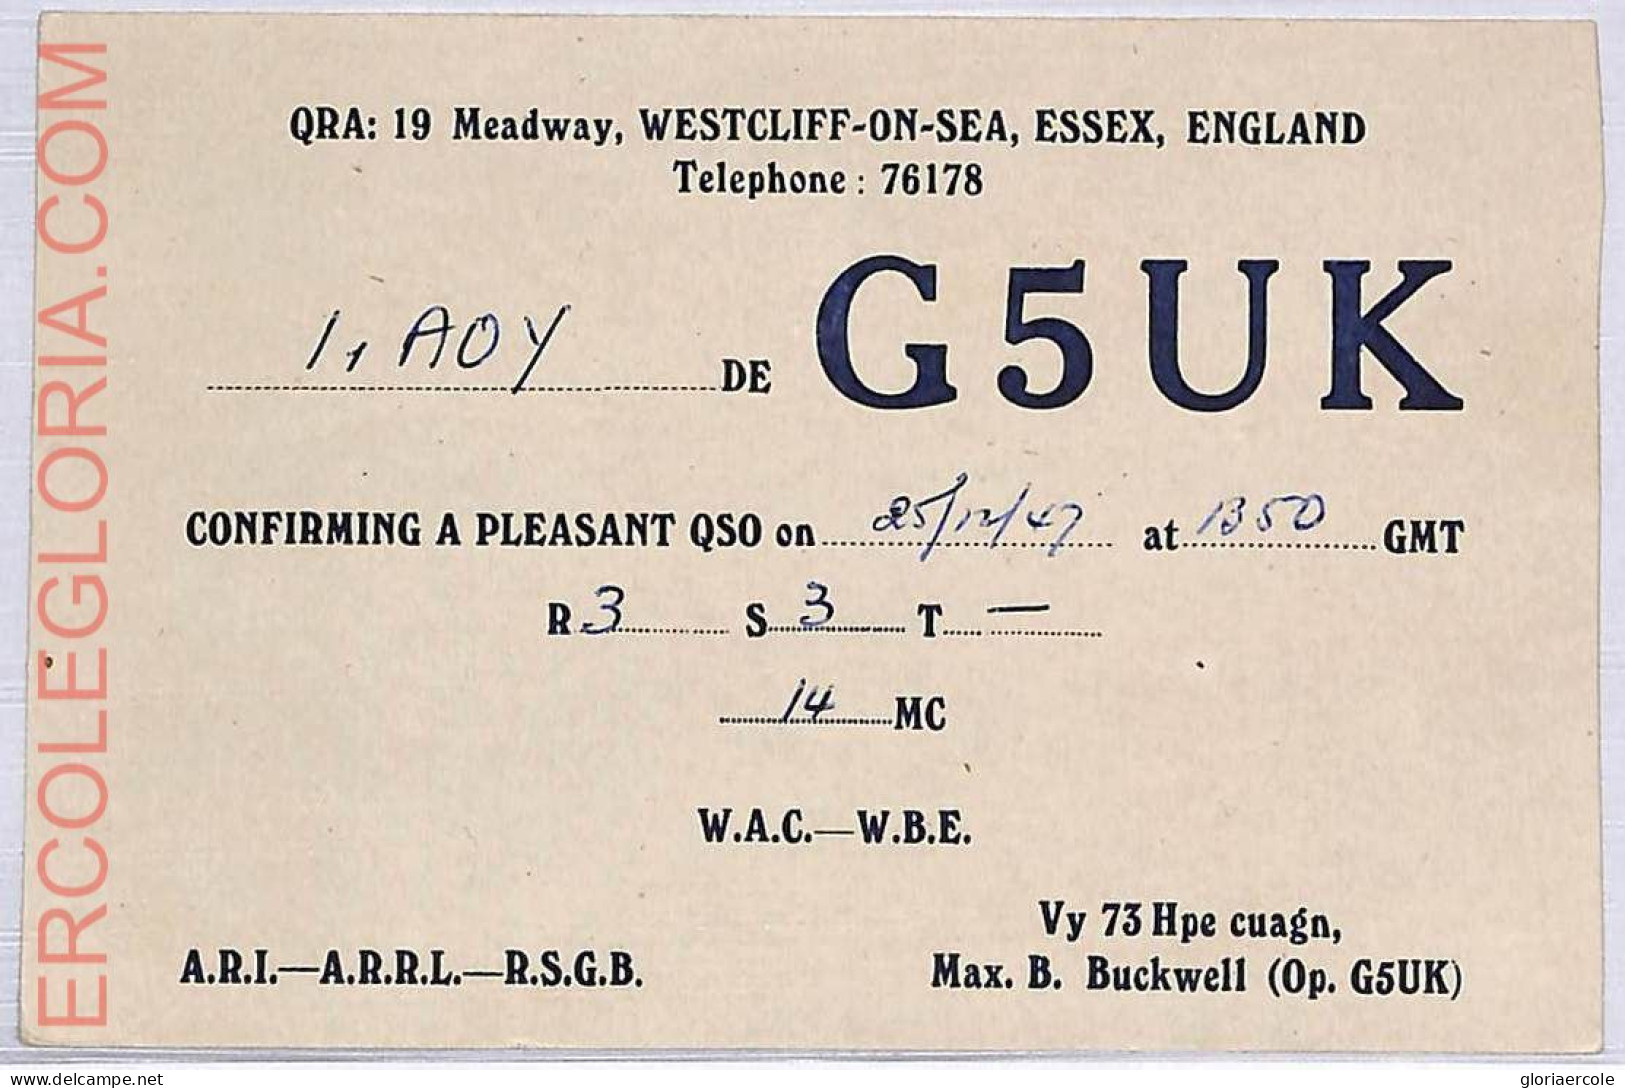 Ad9133 - GREAT BRITAIN - RADIO FREQUENCY CARD - England - 1947 - Radio